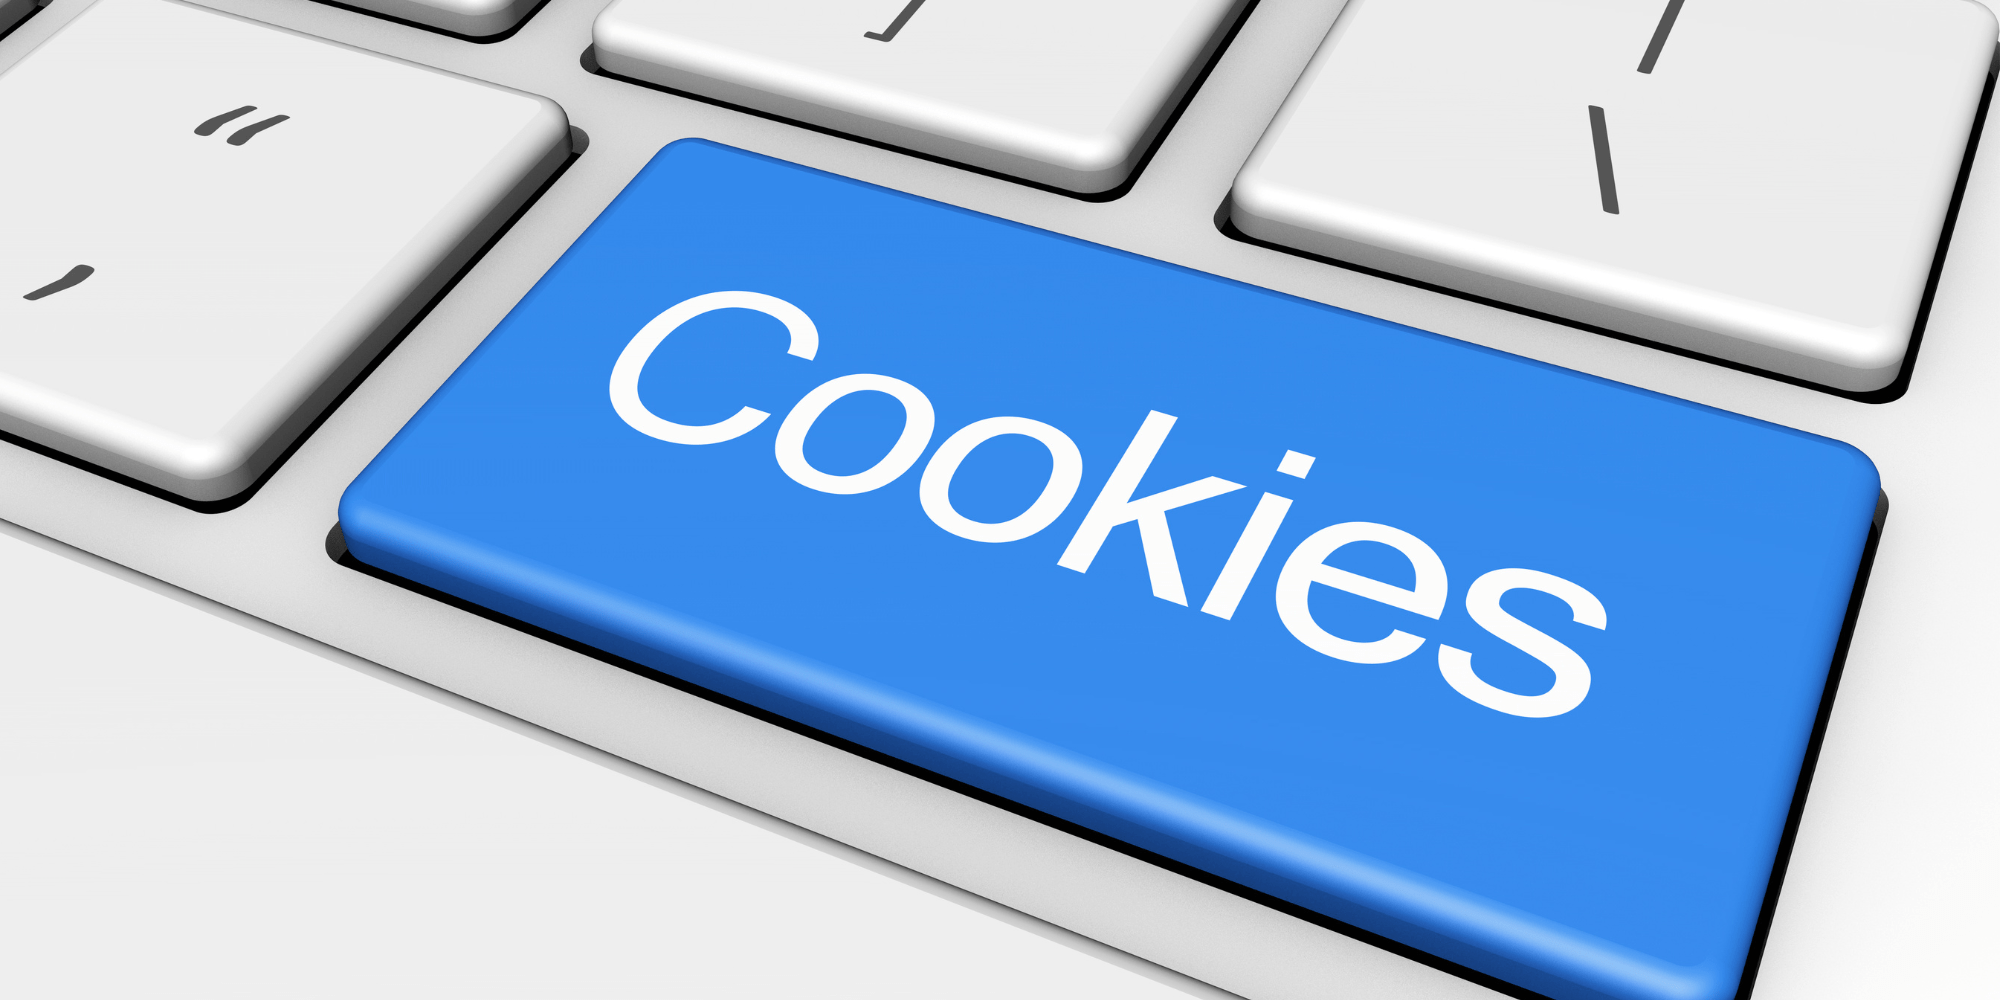 Stolen Cookies Enabling Financial Fraud featured image